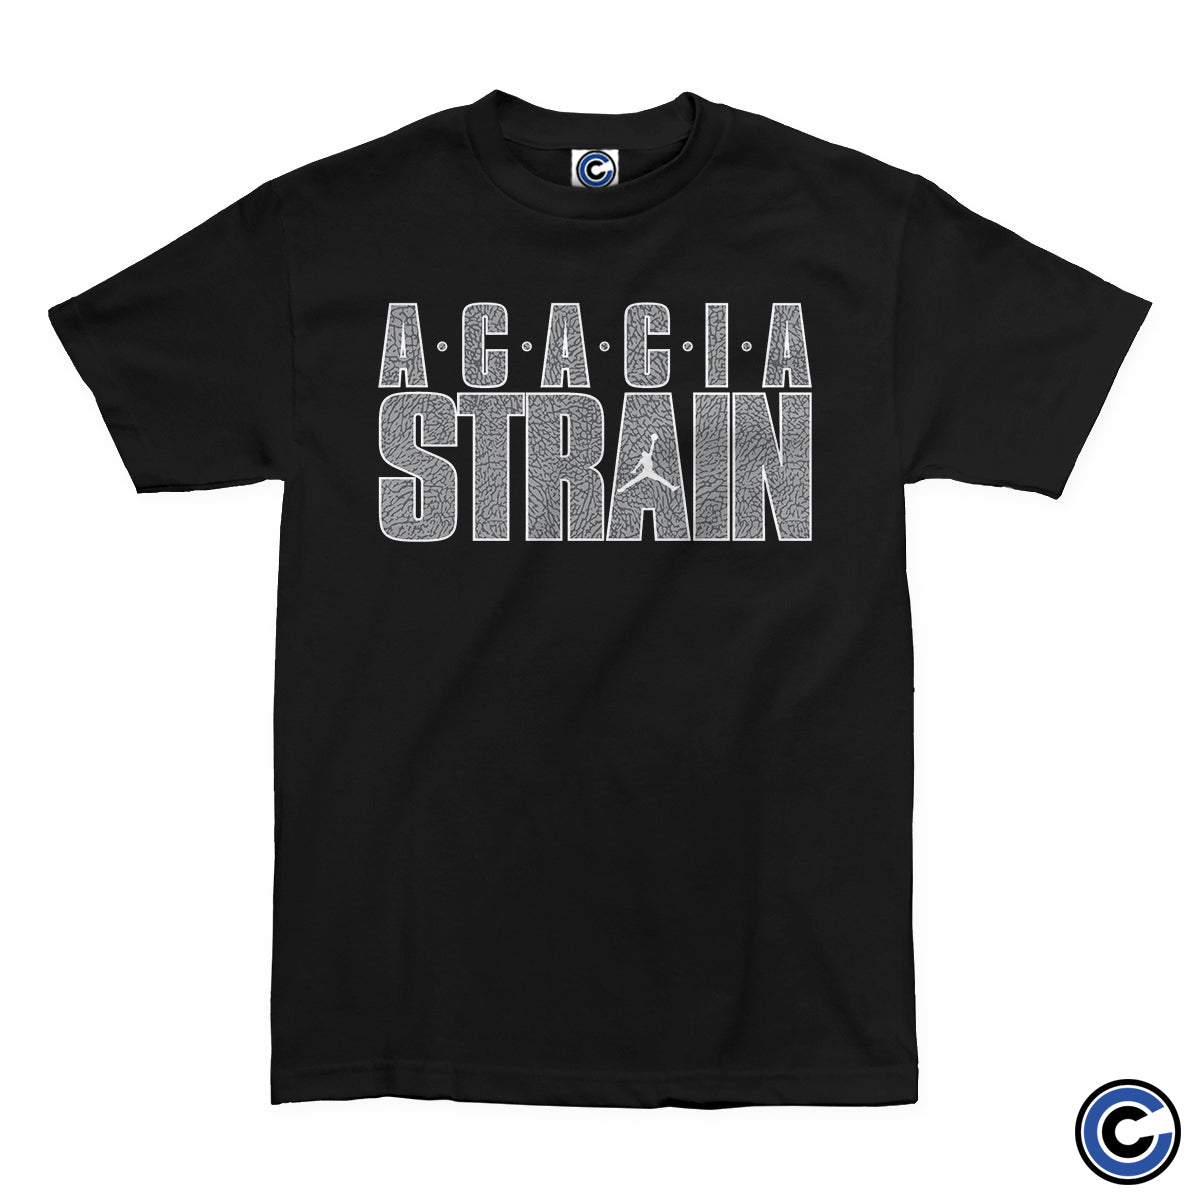 The Acacia Strain "Elephant Man" Shirt